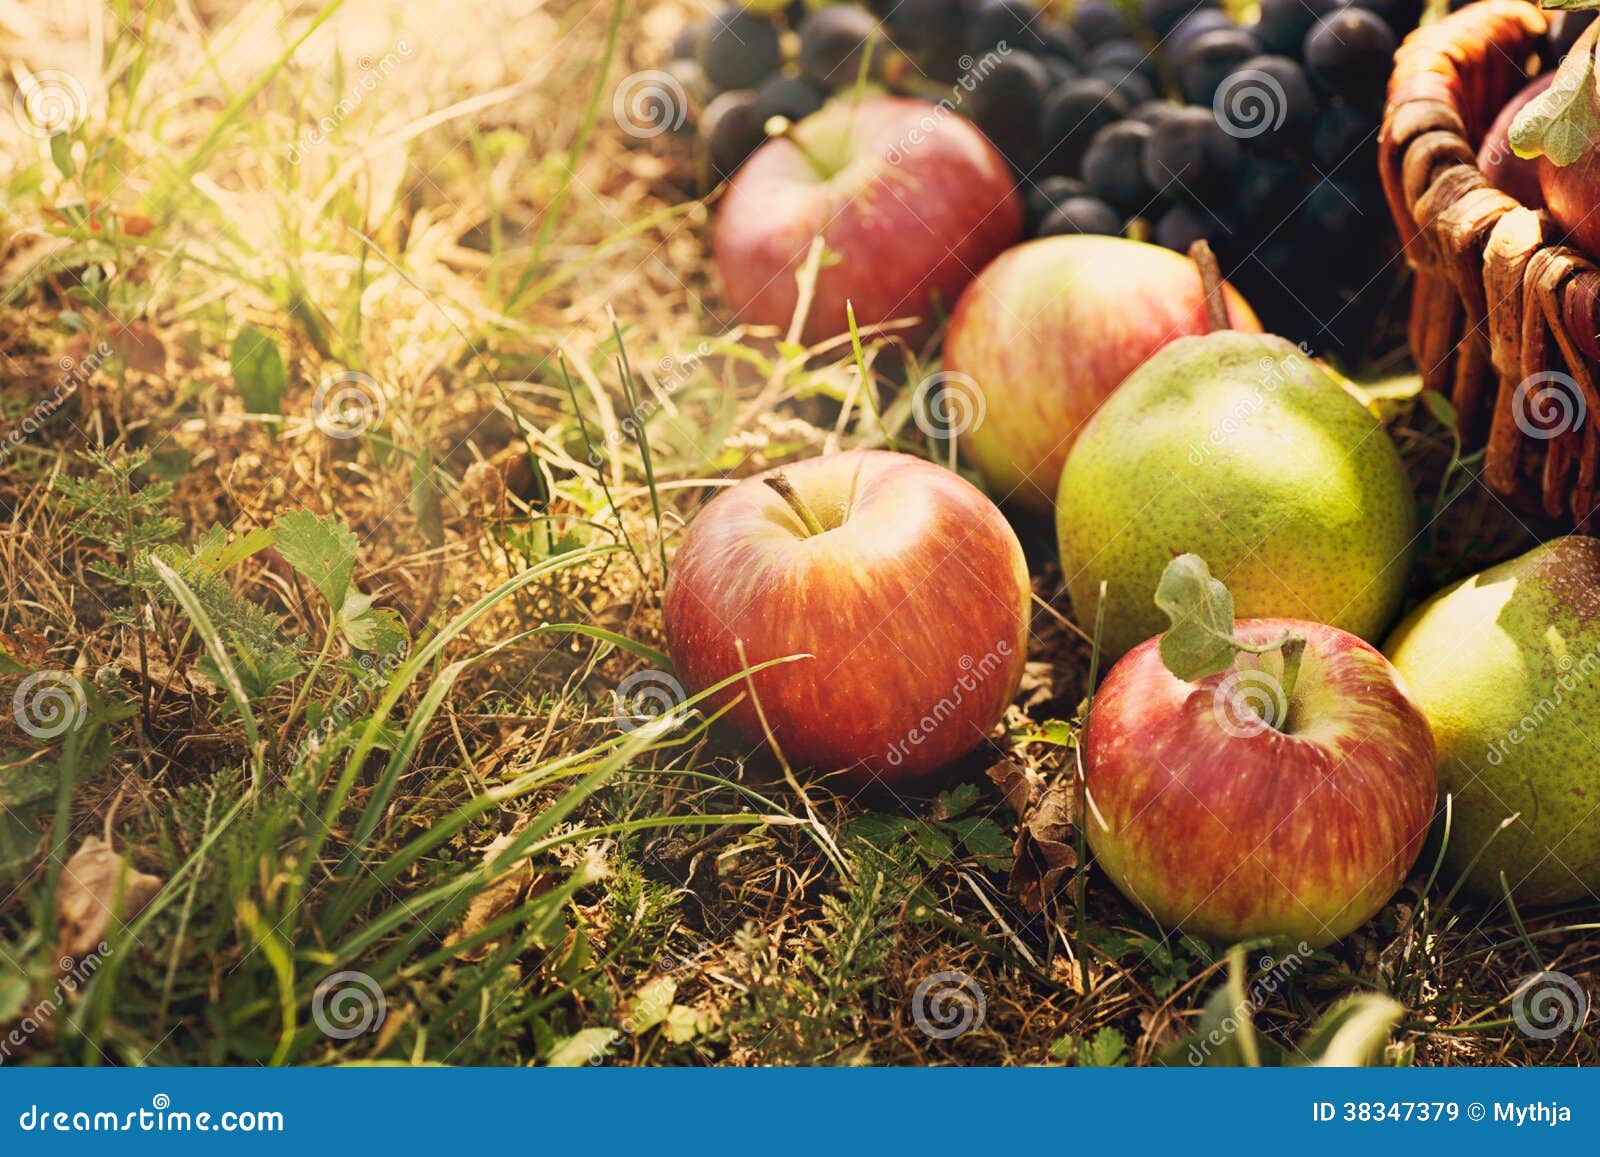 https://thumbs.dreamstime.com/z/organic-fruit-summer-grass-basket-fresh-grapes-pears-apples-nature-38347379.jpg